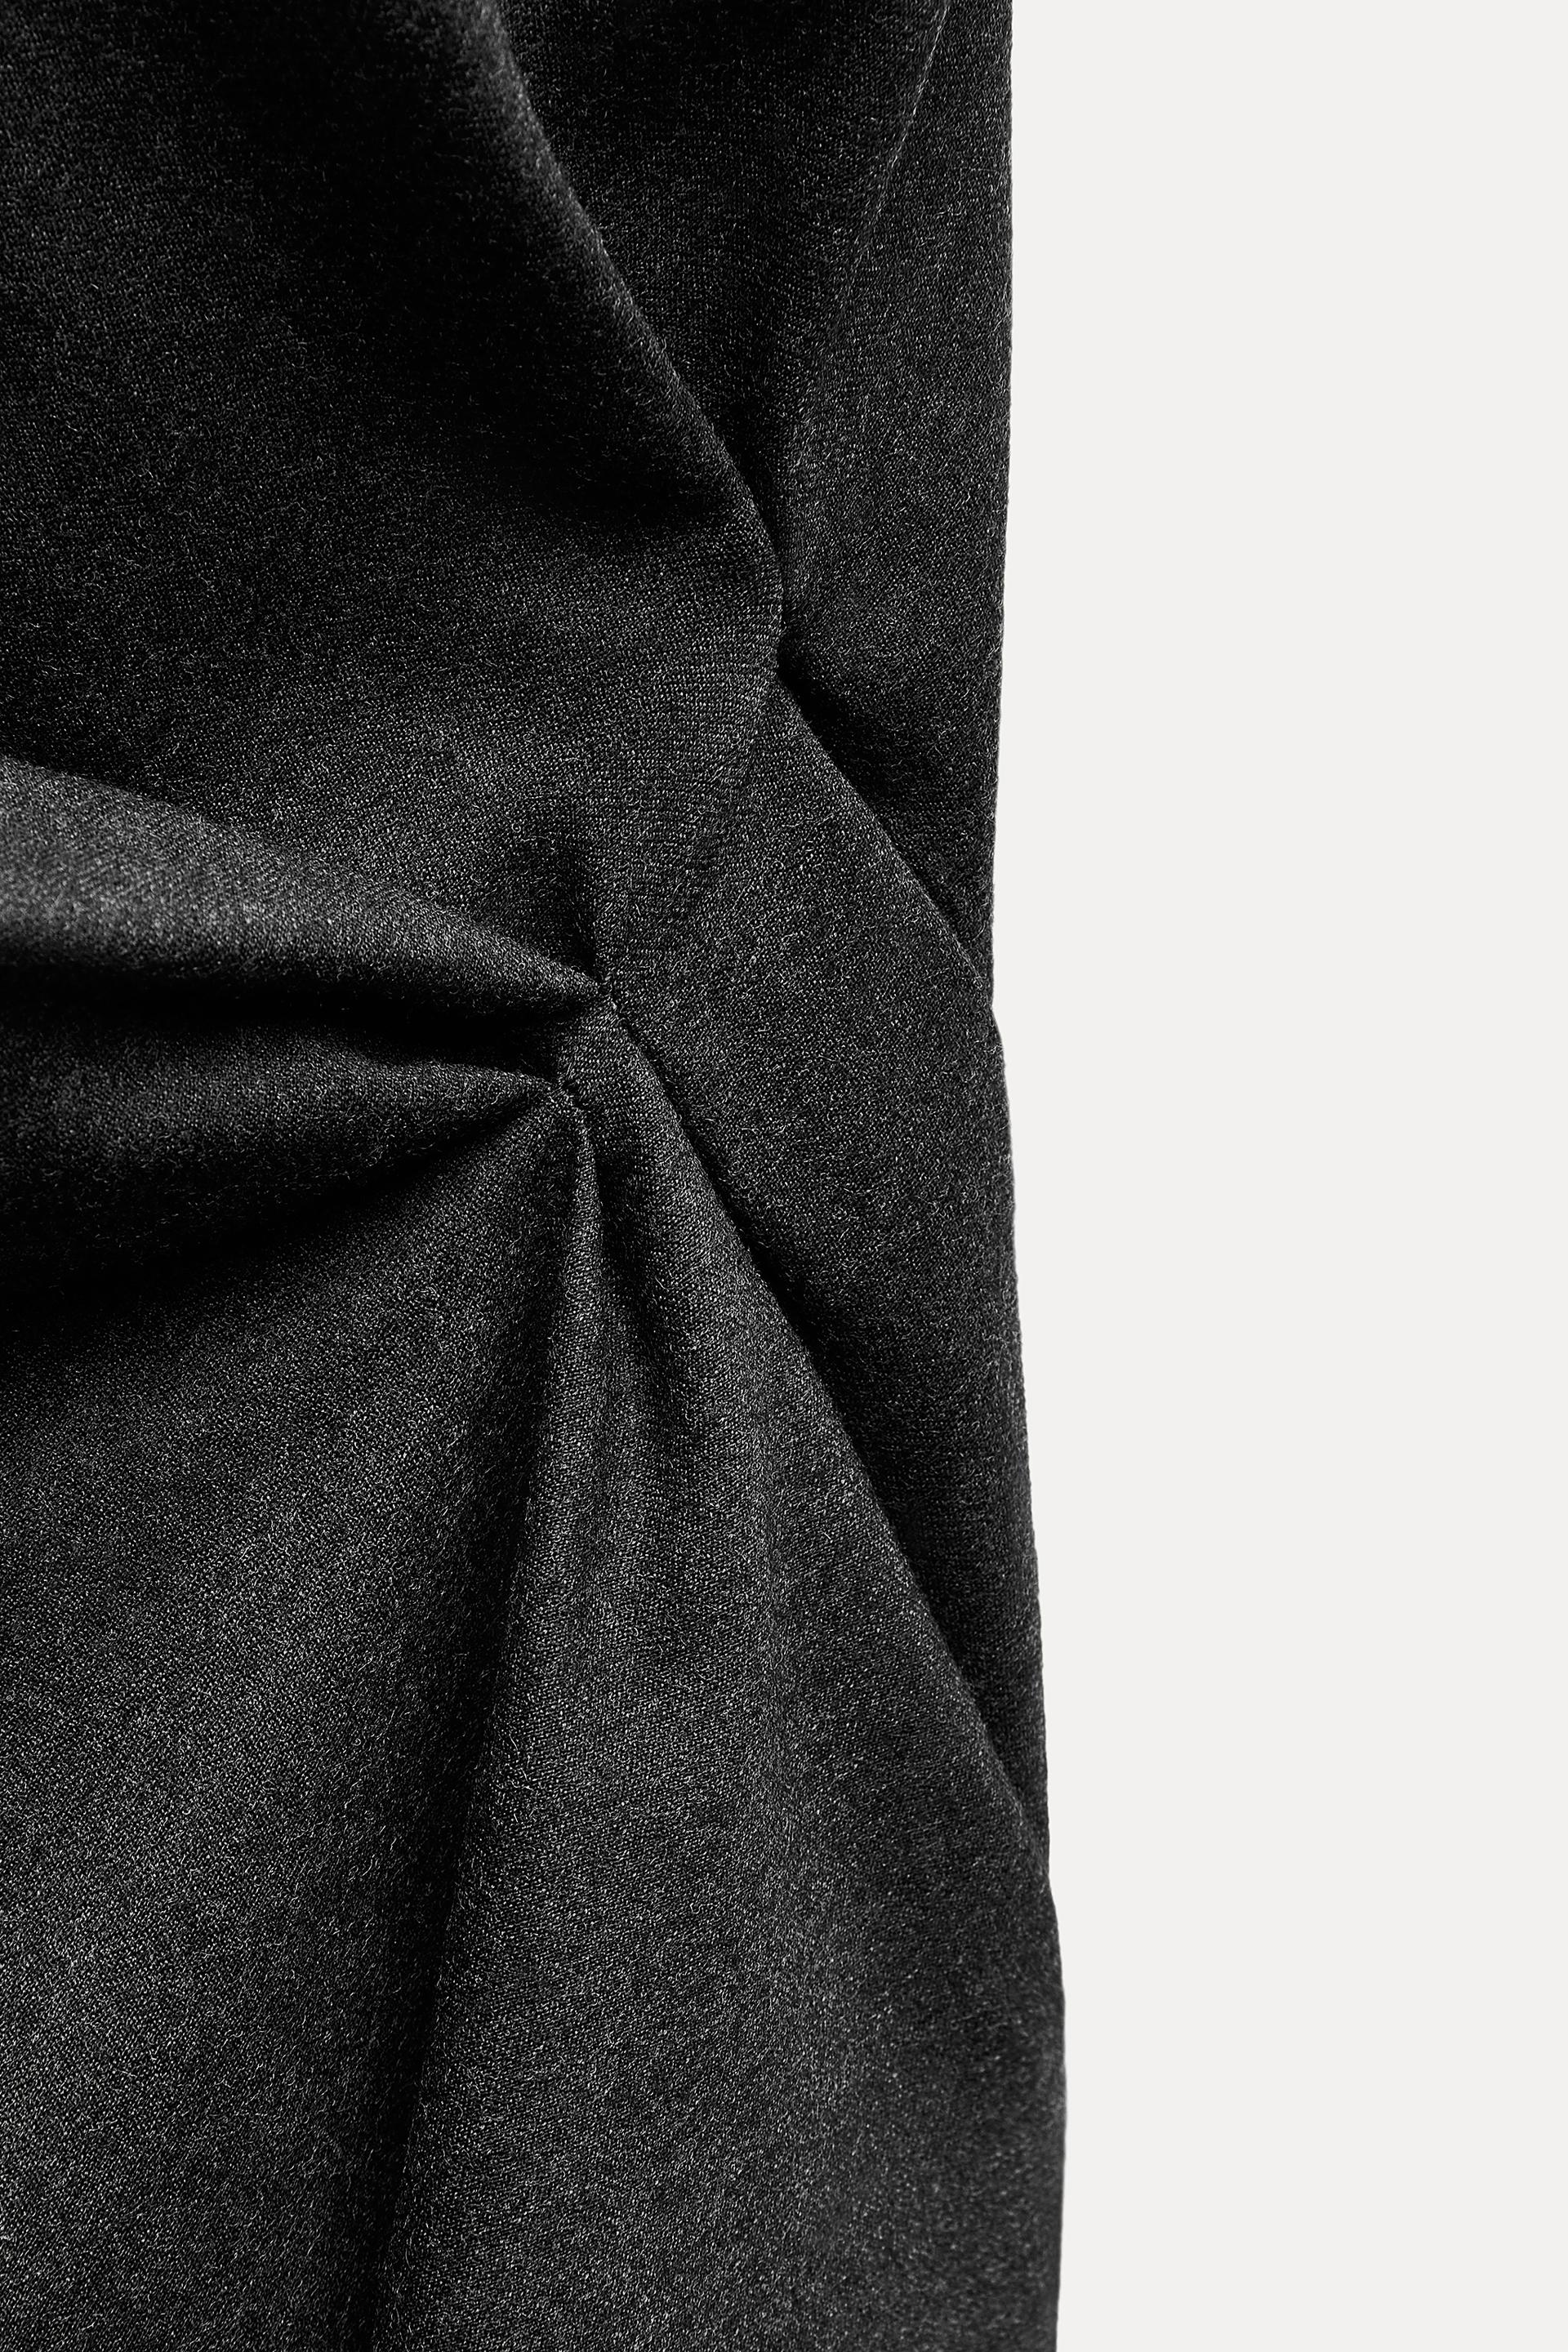 ZARA strappy wool bra Gray - $21 (30% Off Retail) New With Tags